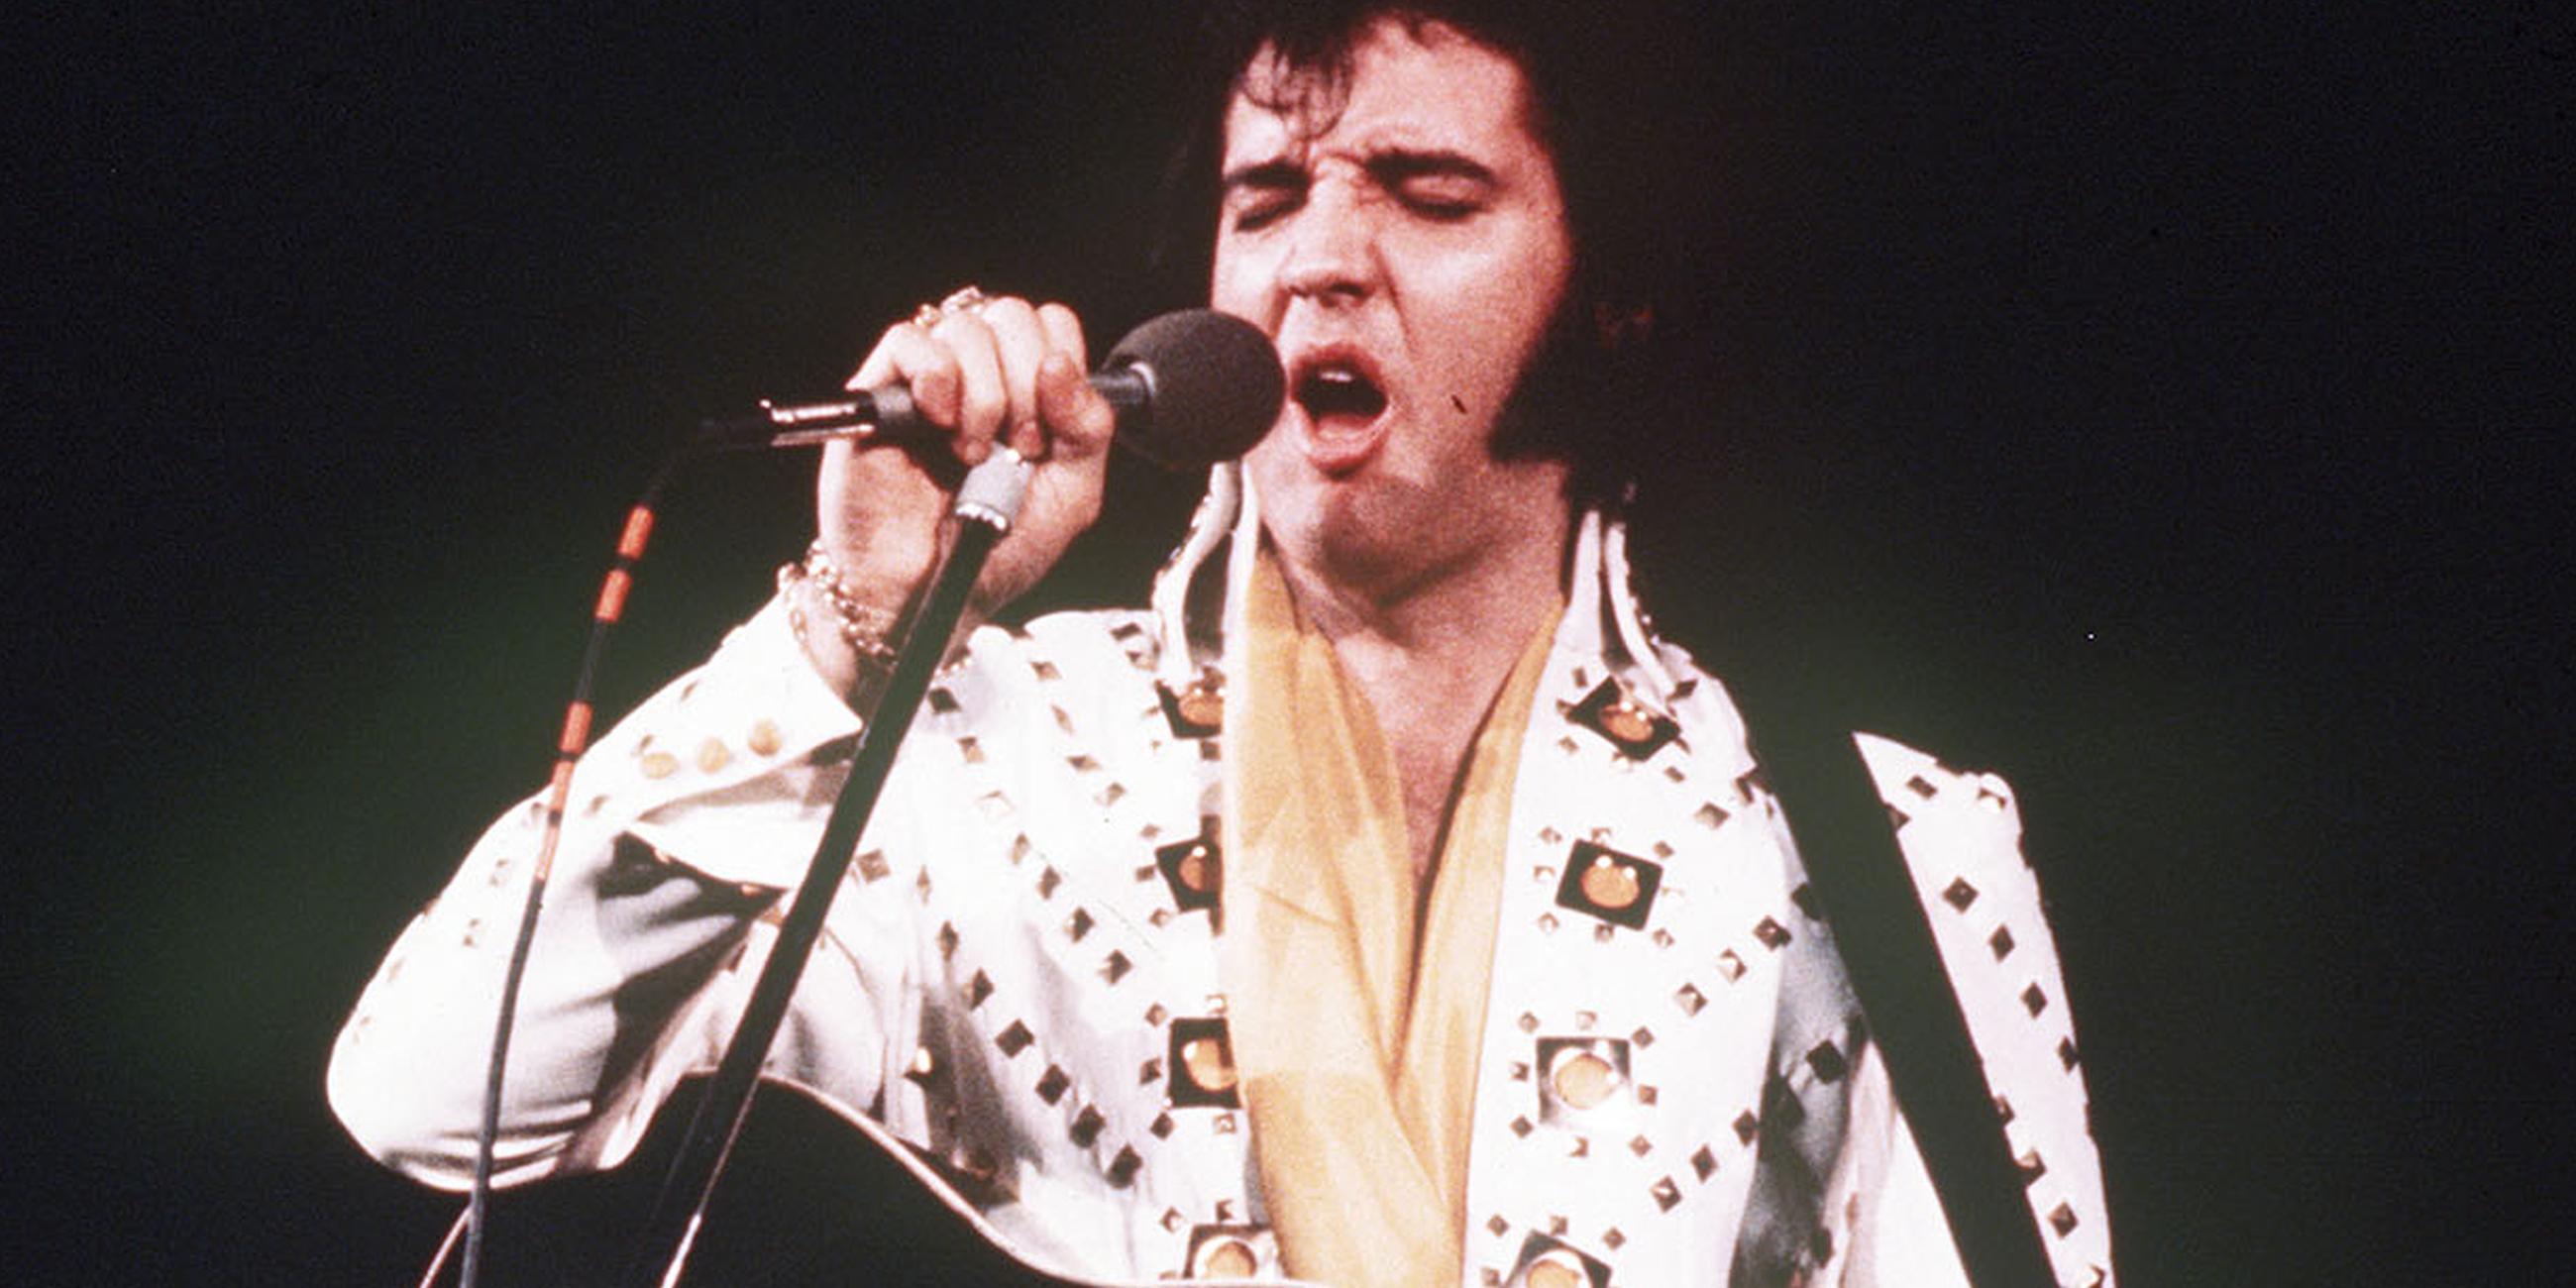 Der King of Rock’n’Roll hat Geburtstag – heute wäre Elvis Presley 85 Jahre alt geworden.